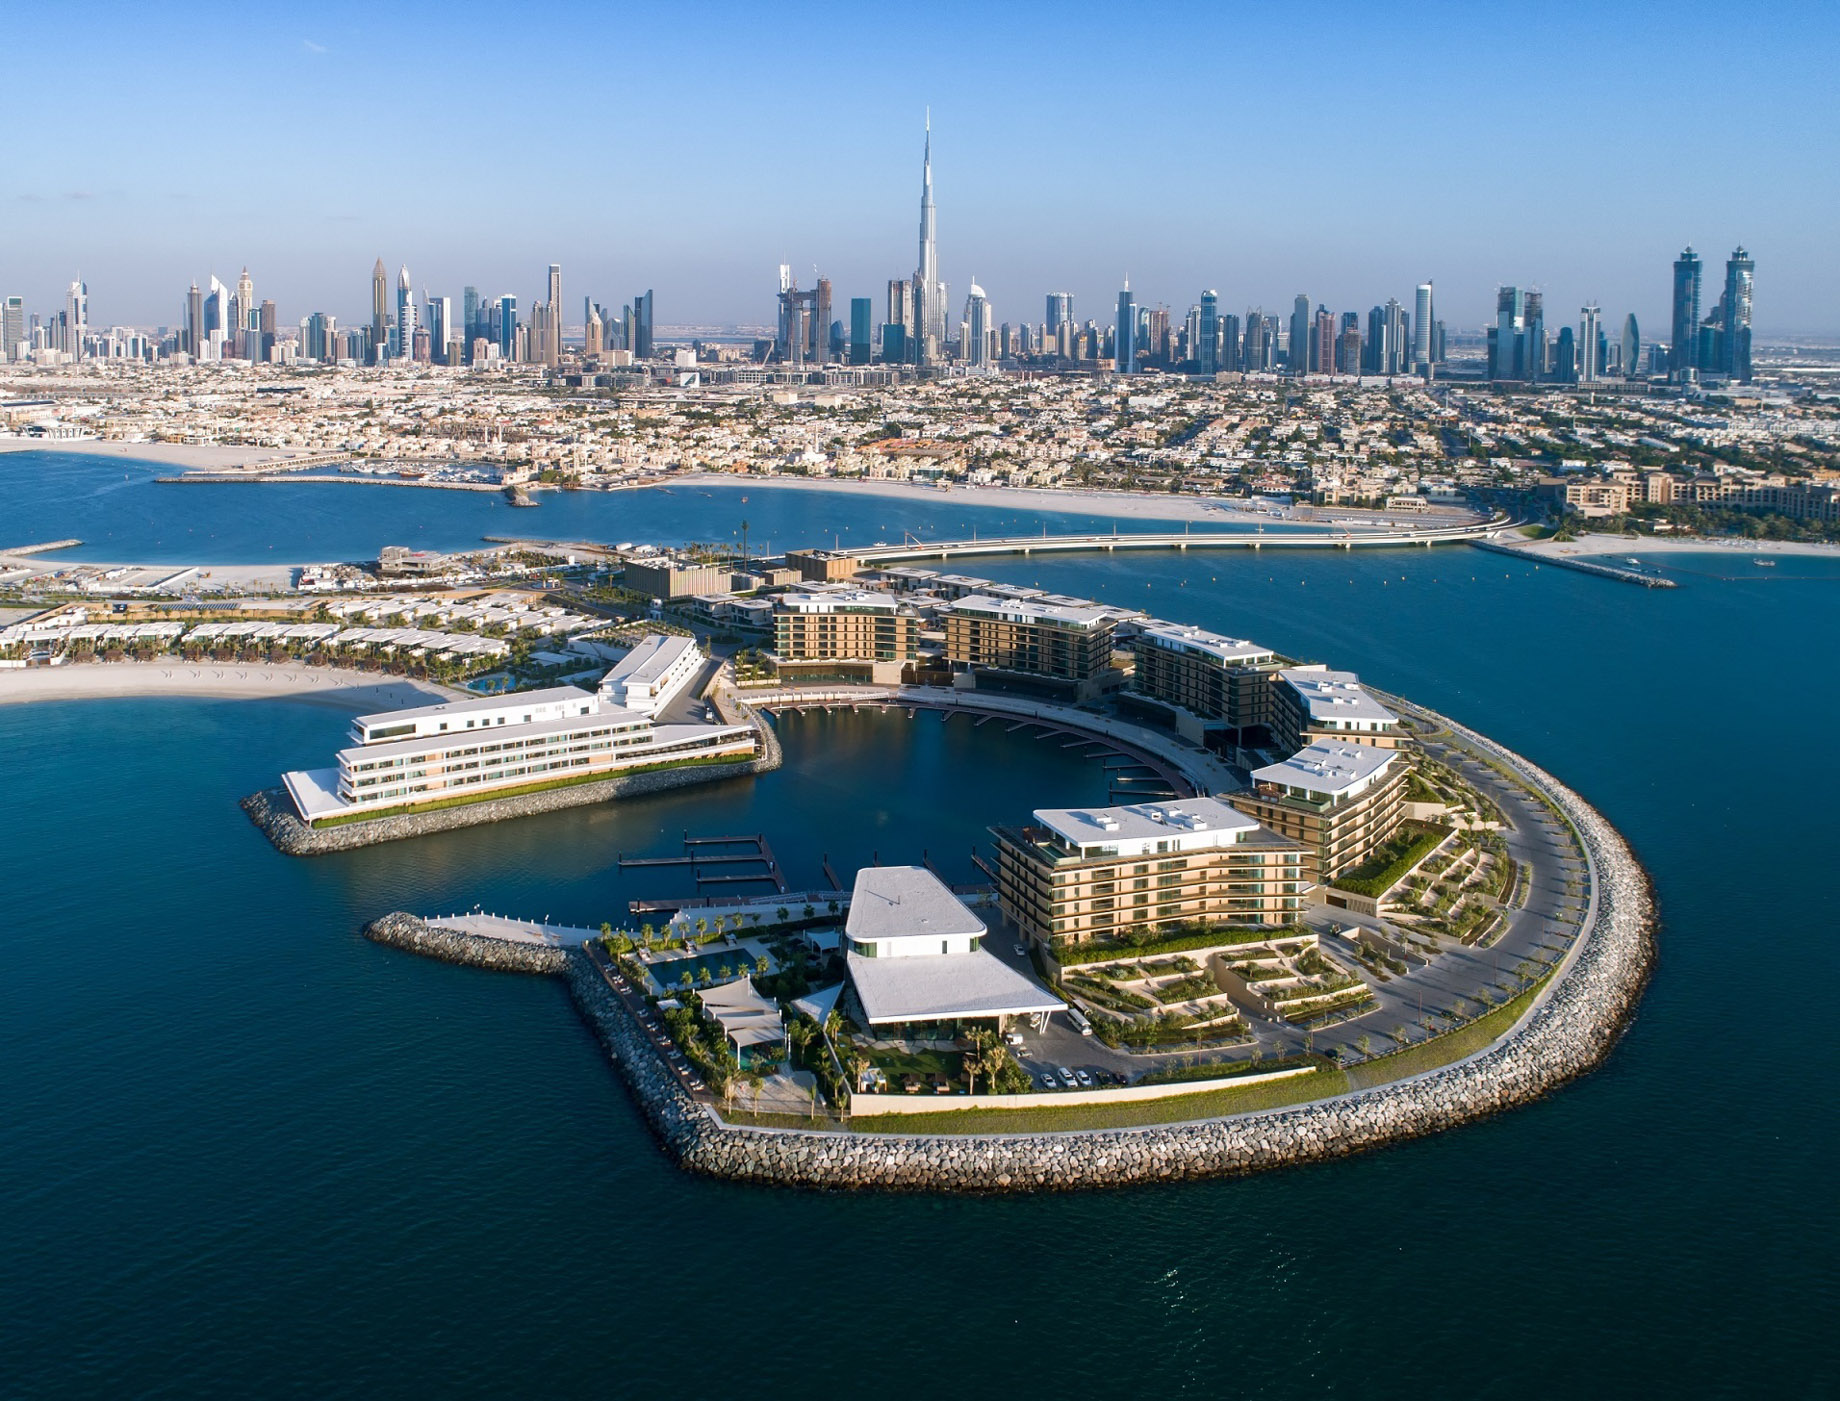 Bvlgari Luxury Resort Dubai - Jumeira Bay Island, Dubai, UAE - Resort Aerial View